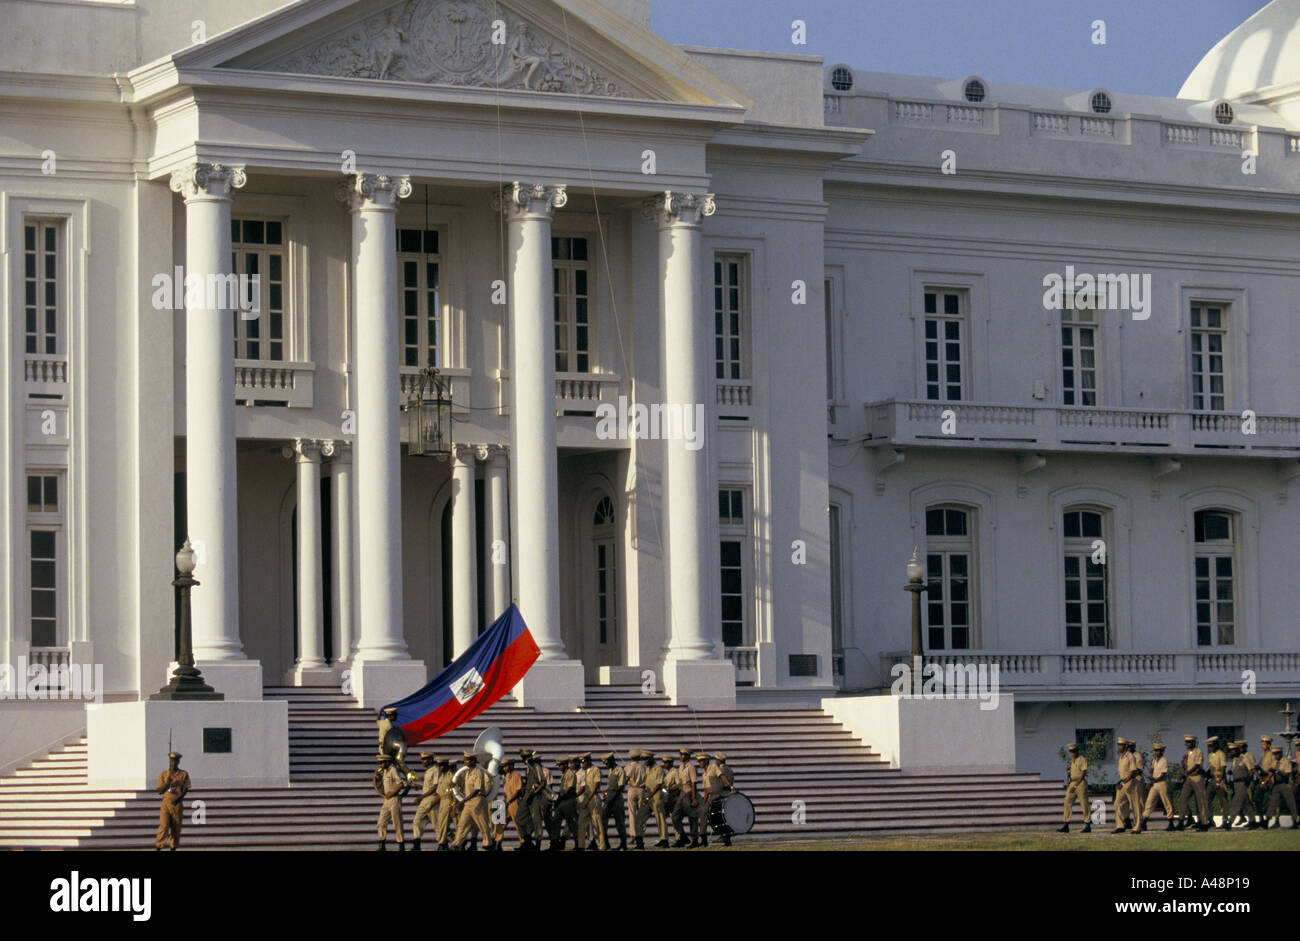 Haiti national palace hi-res stock photography and images - Alamy